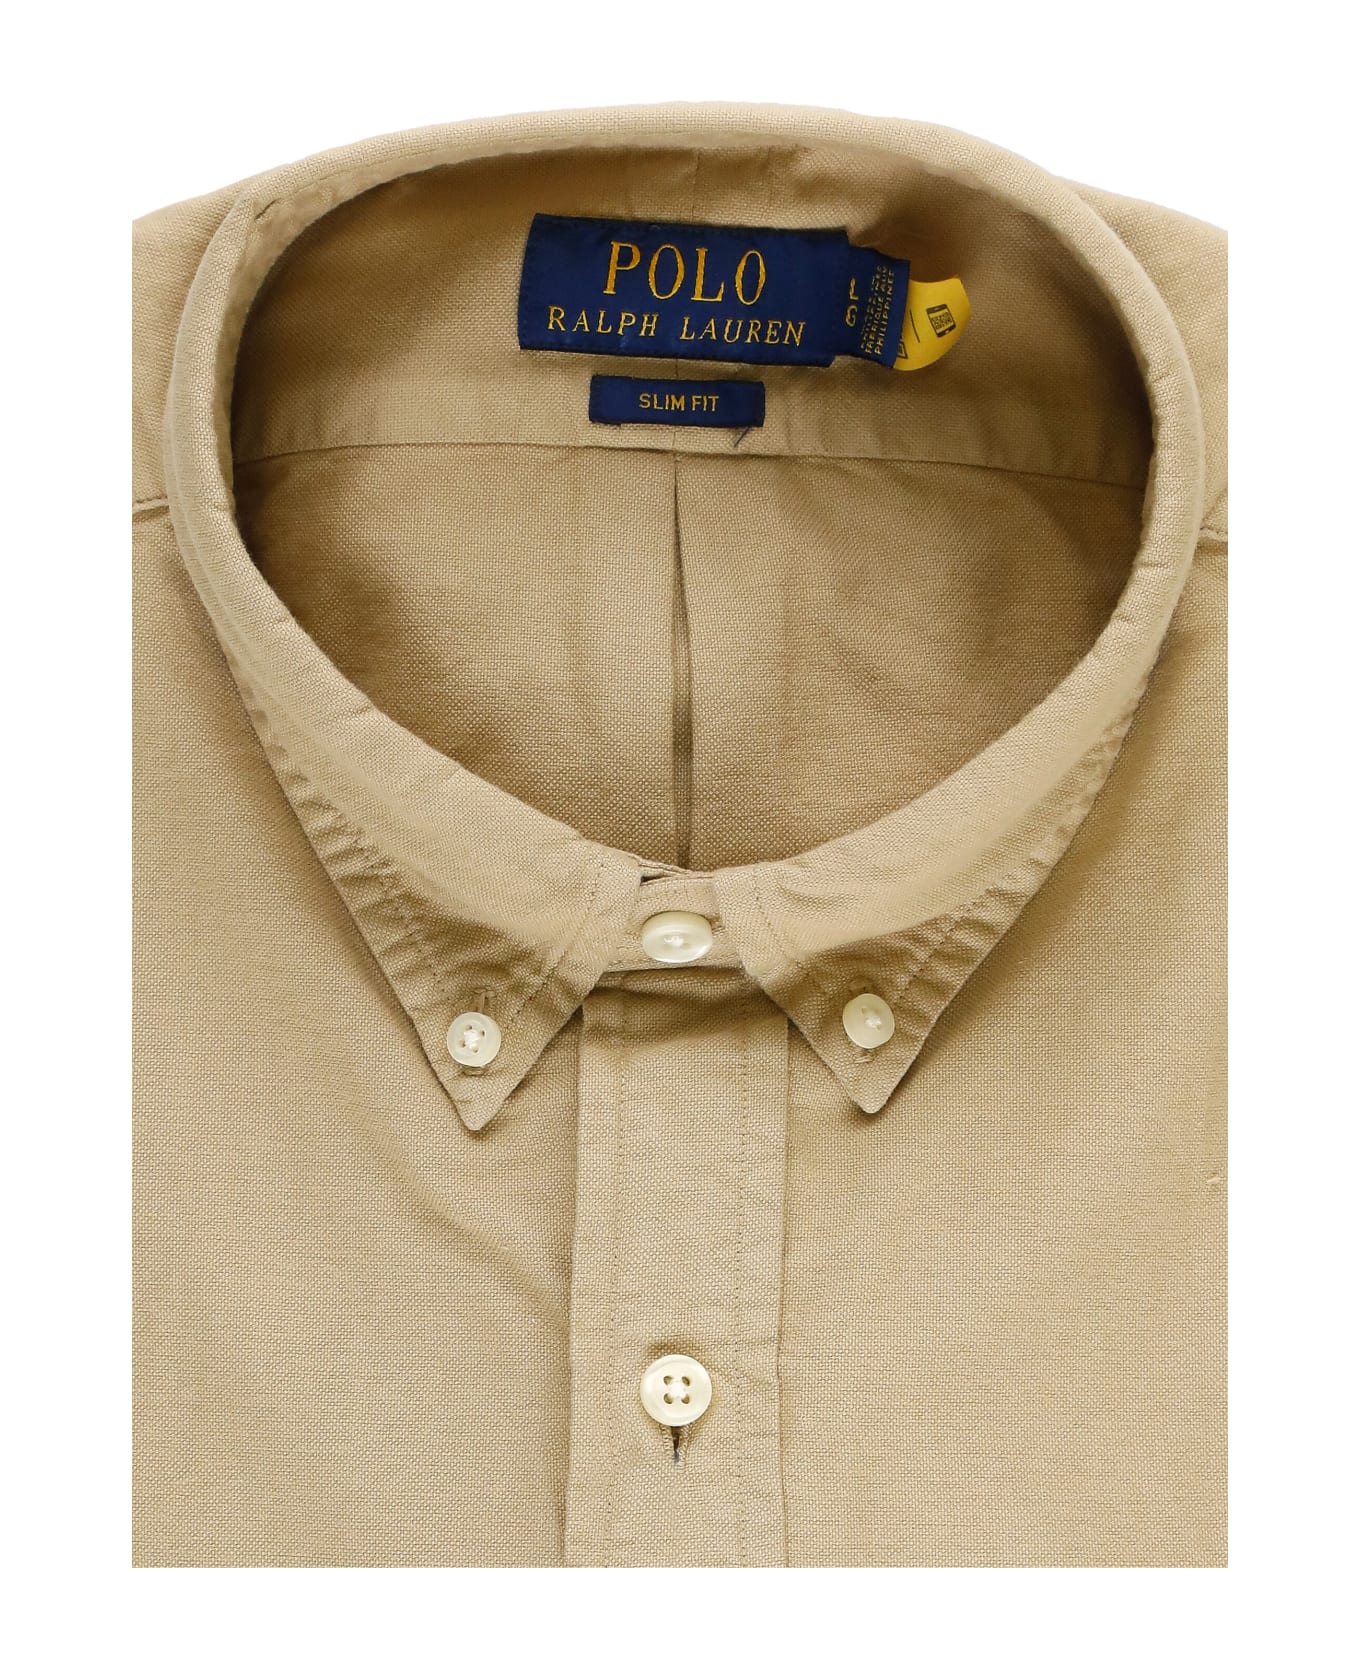 Polo Ralph Lauren Pony Shirt - Surrey Tan